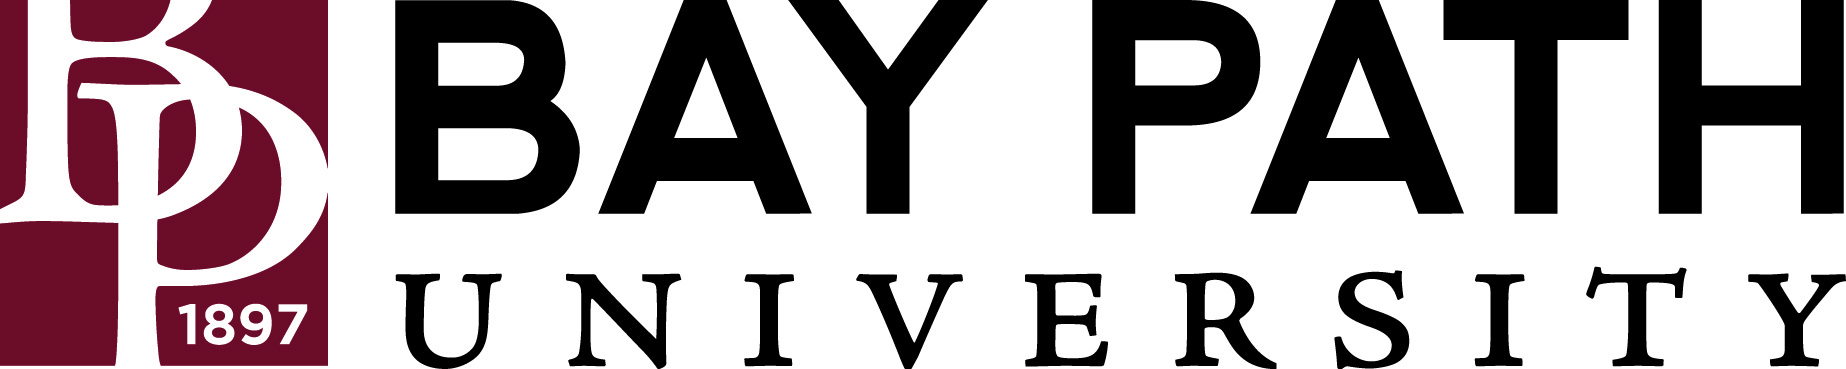 Bay Path University logo